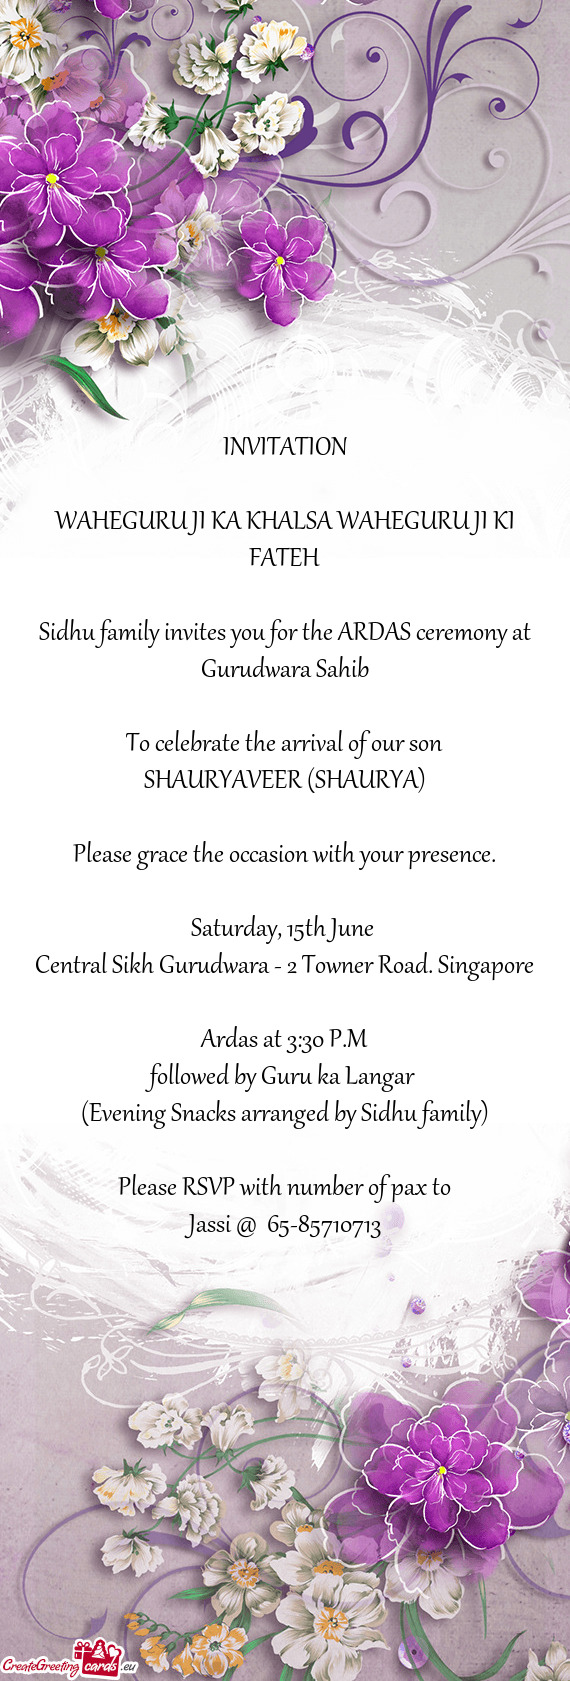 Sidhu family invites you for the ARDAS ceremony at Gurudwara Sahib